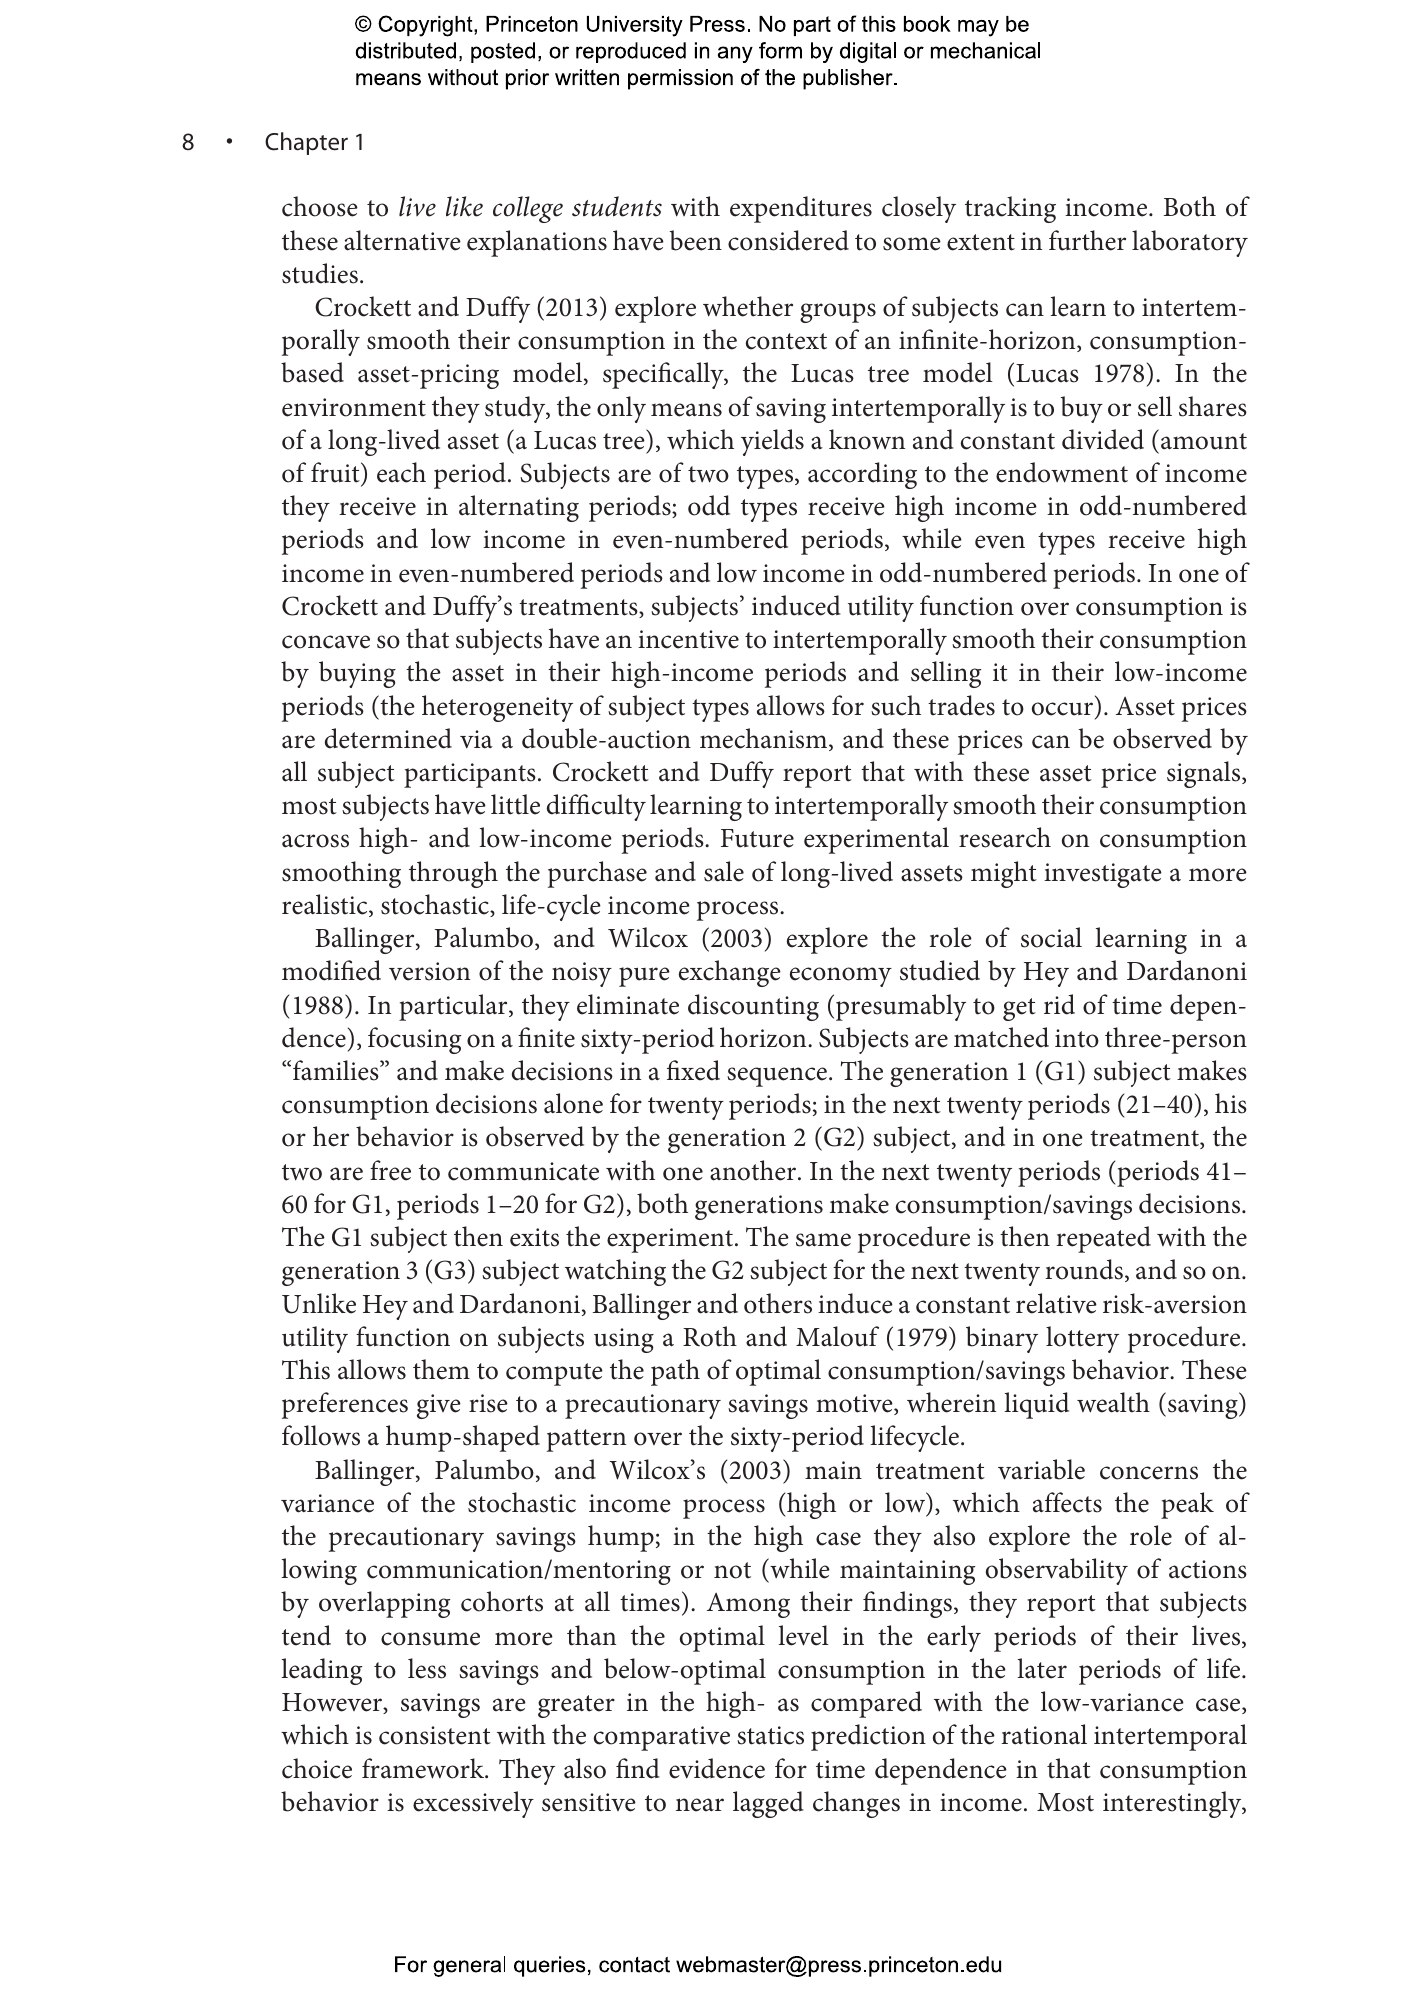 The Handbook of Experimental Economics, Volume 2 | Princeton 